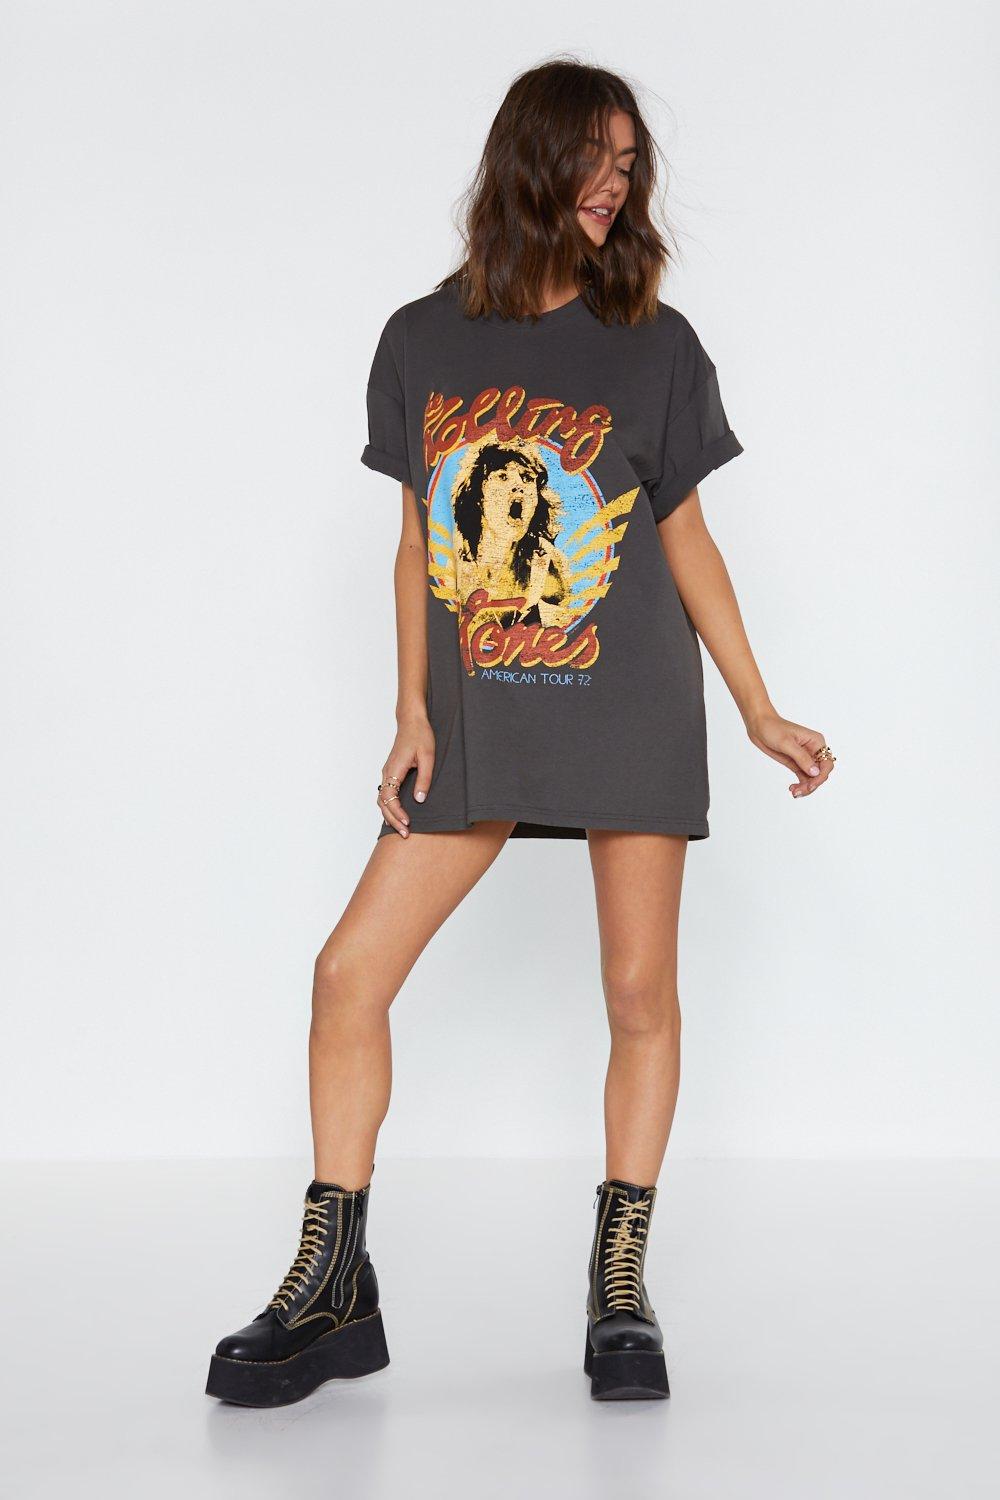 Rolling Stones T-Shirt Dress | Nasty Gal